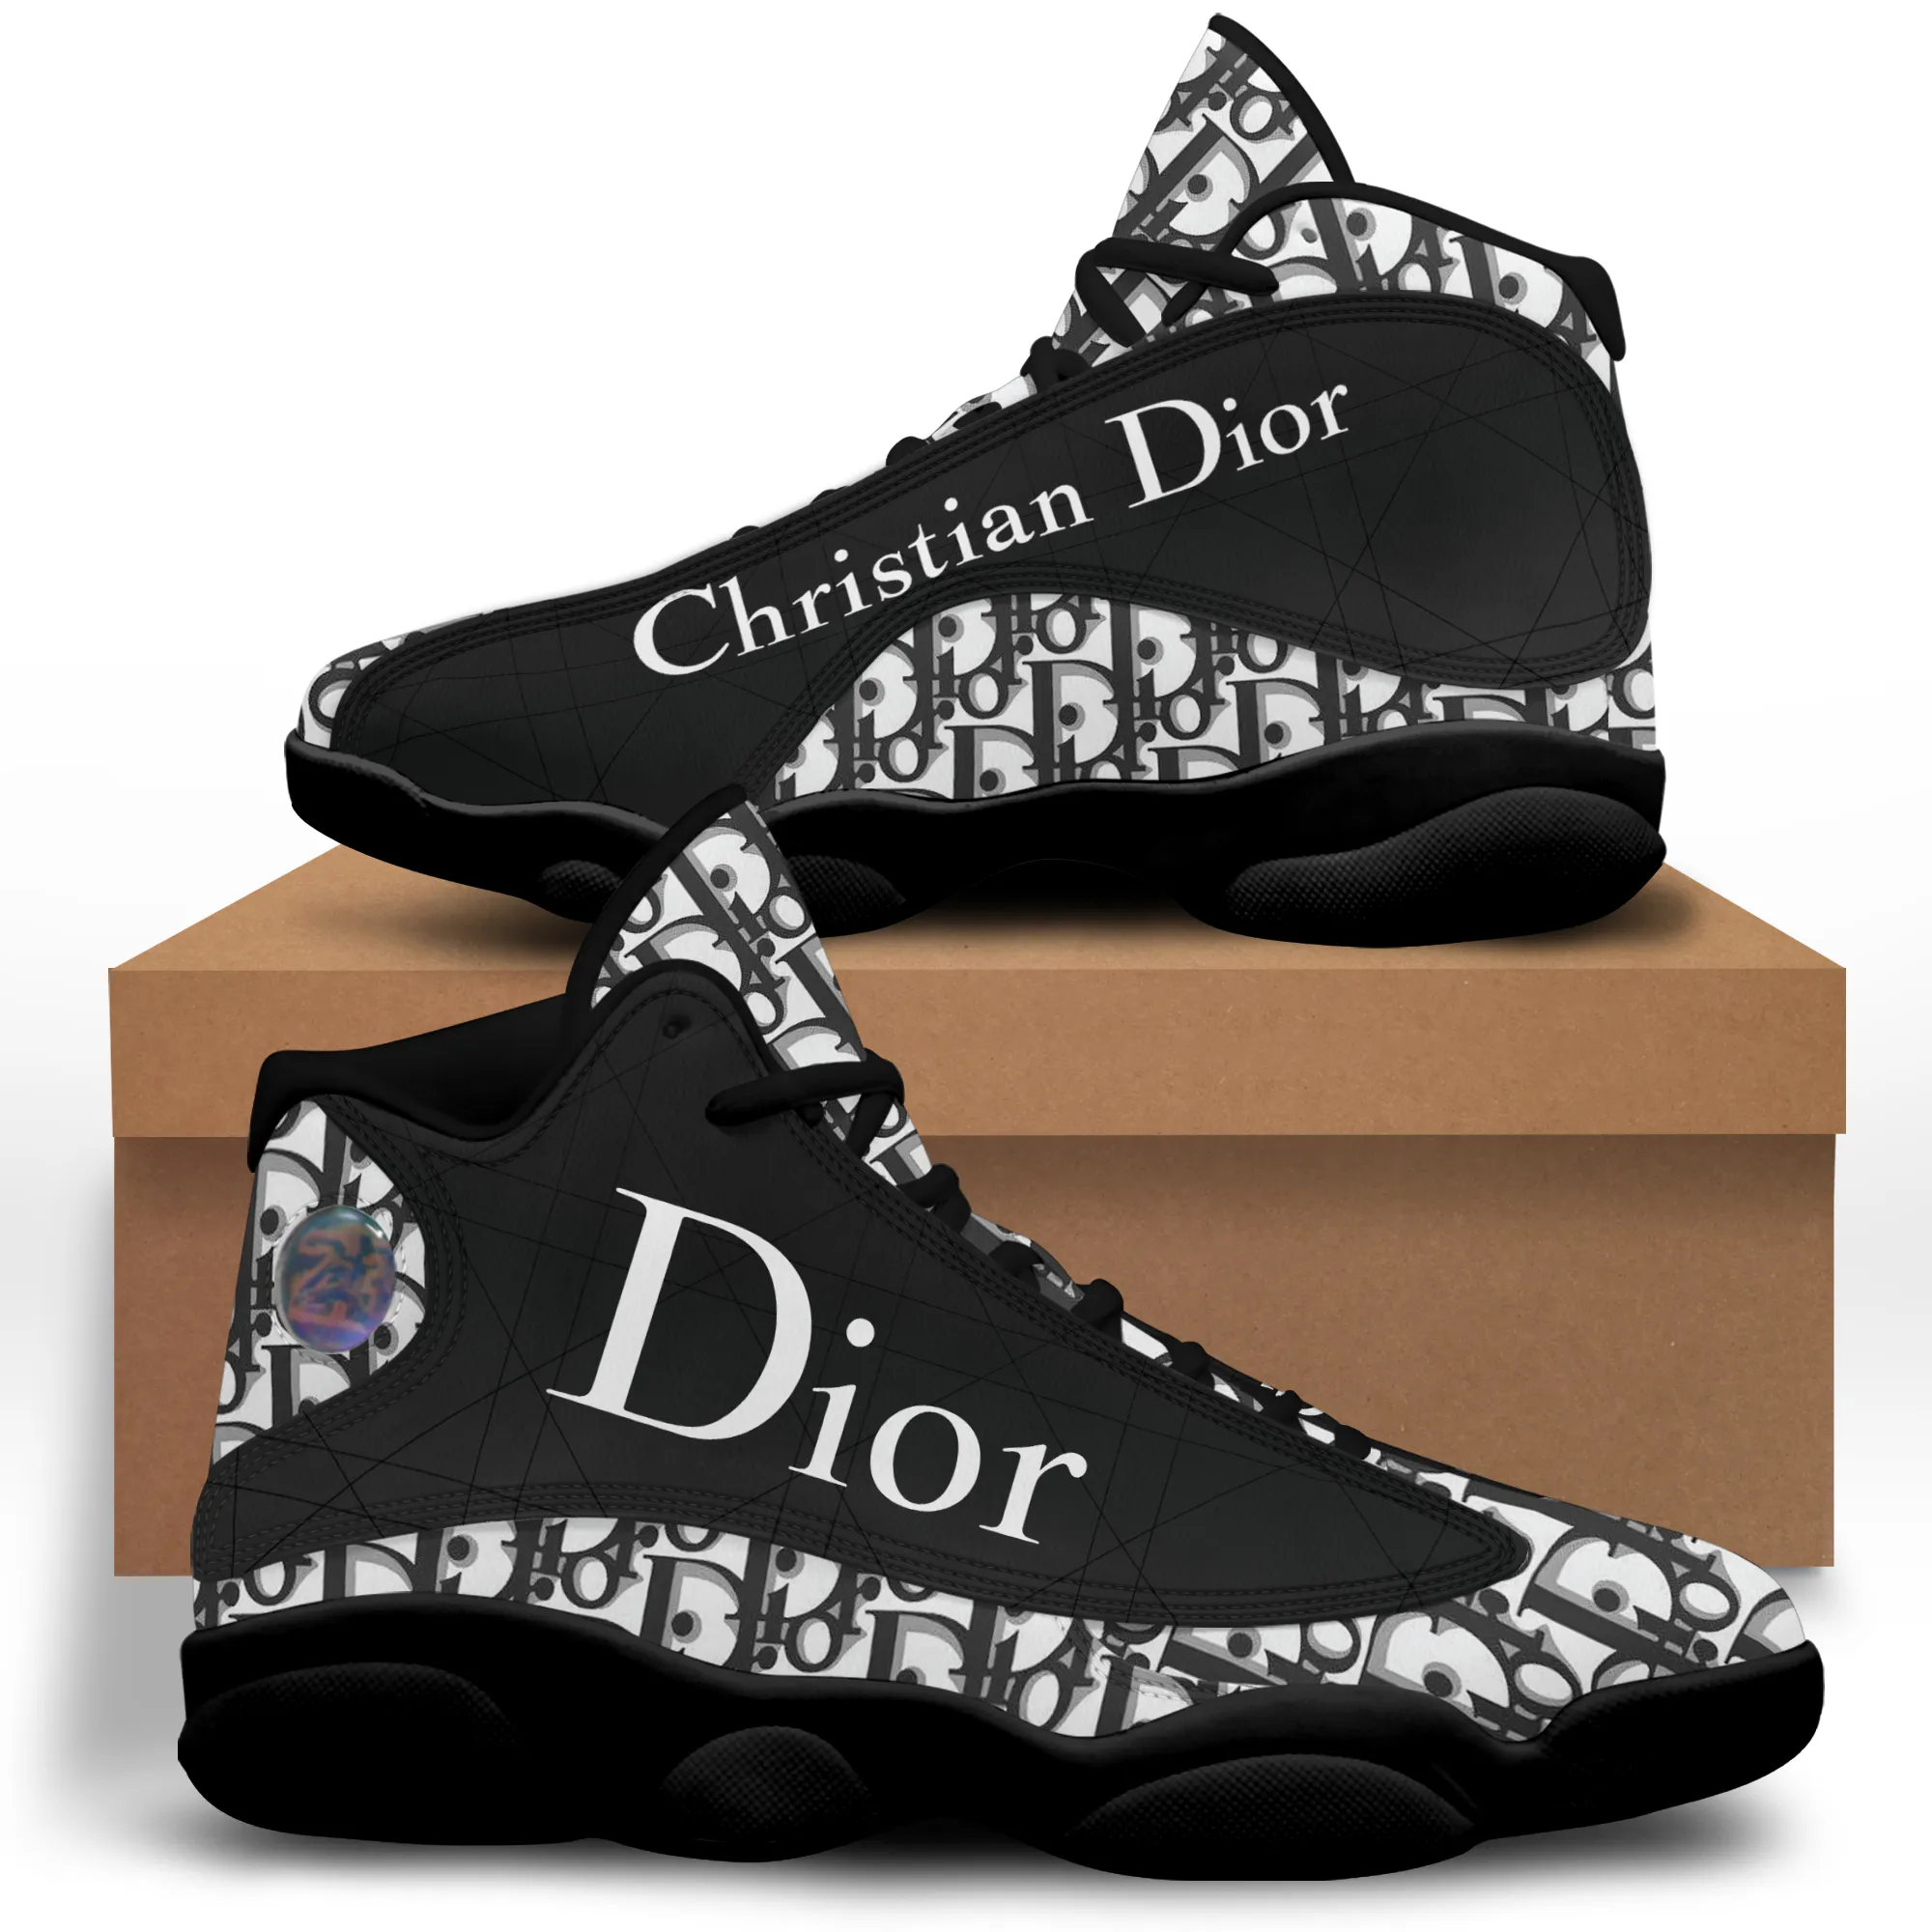 Christian Dior Air Jordan 13 Shoes Luxury Trending Fashion Sneakers